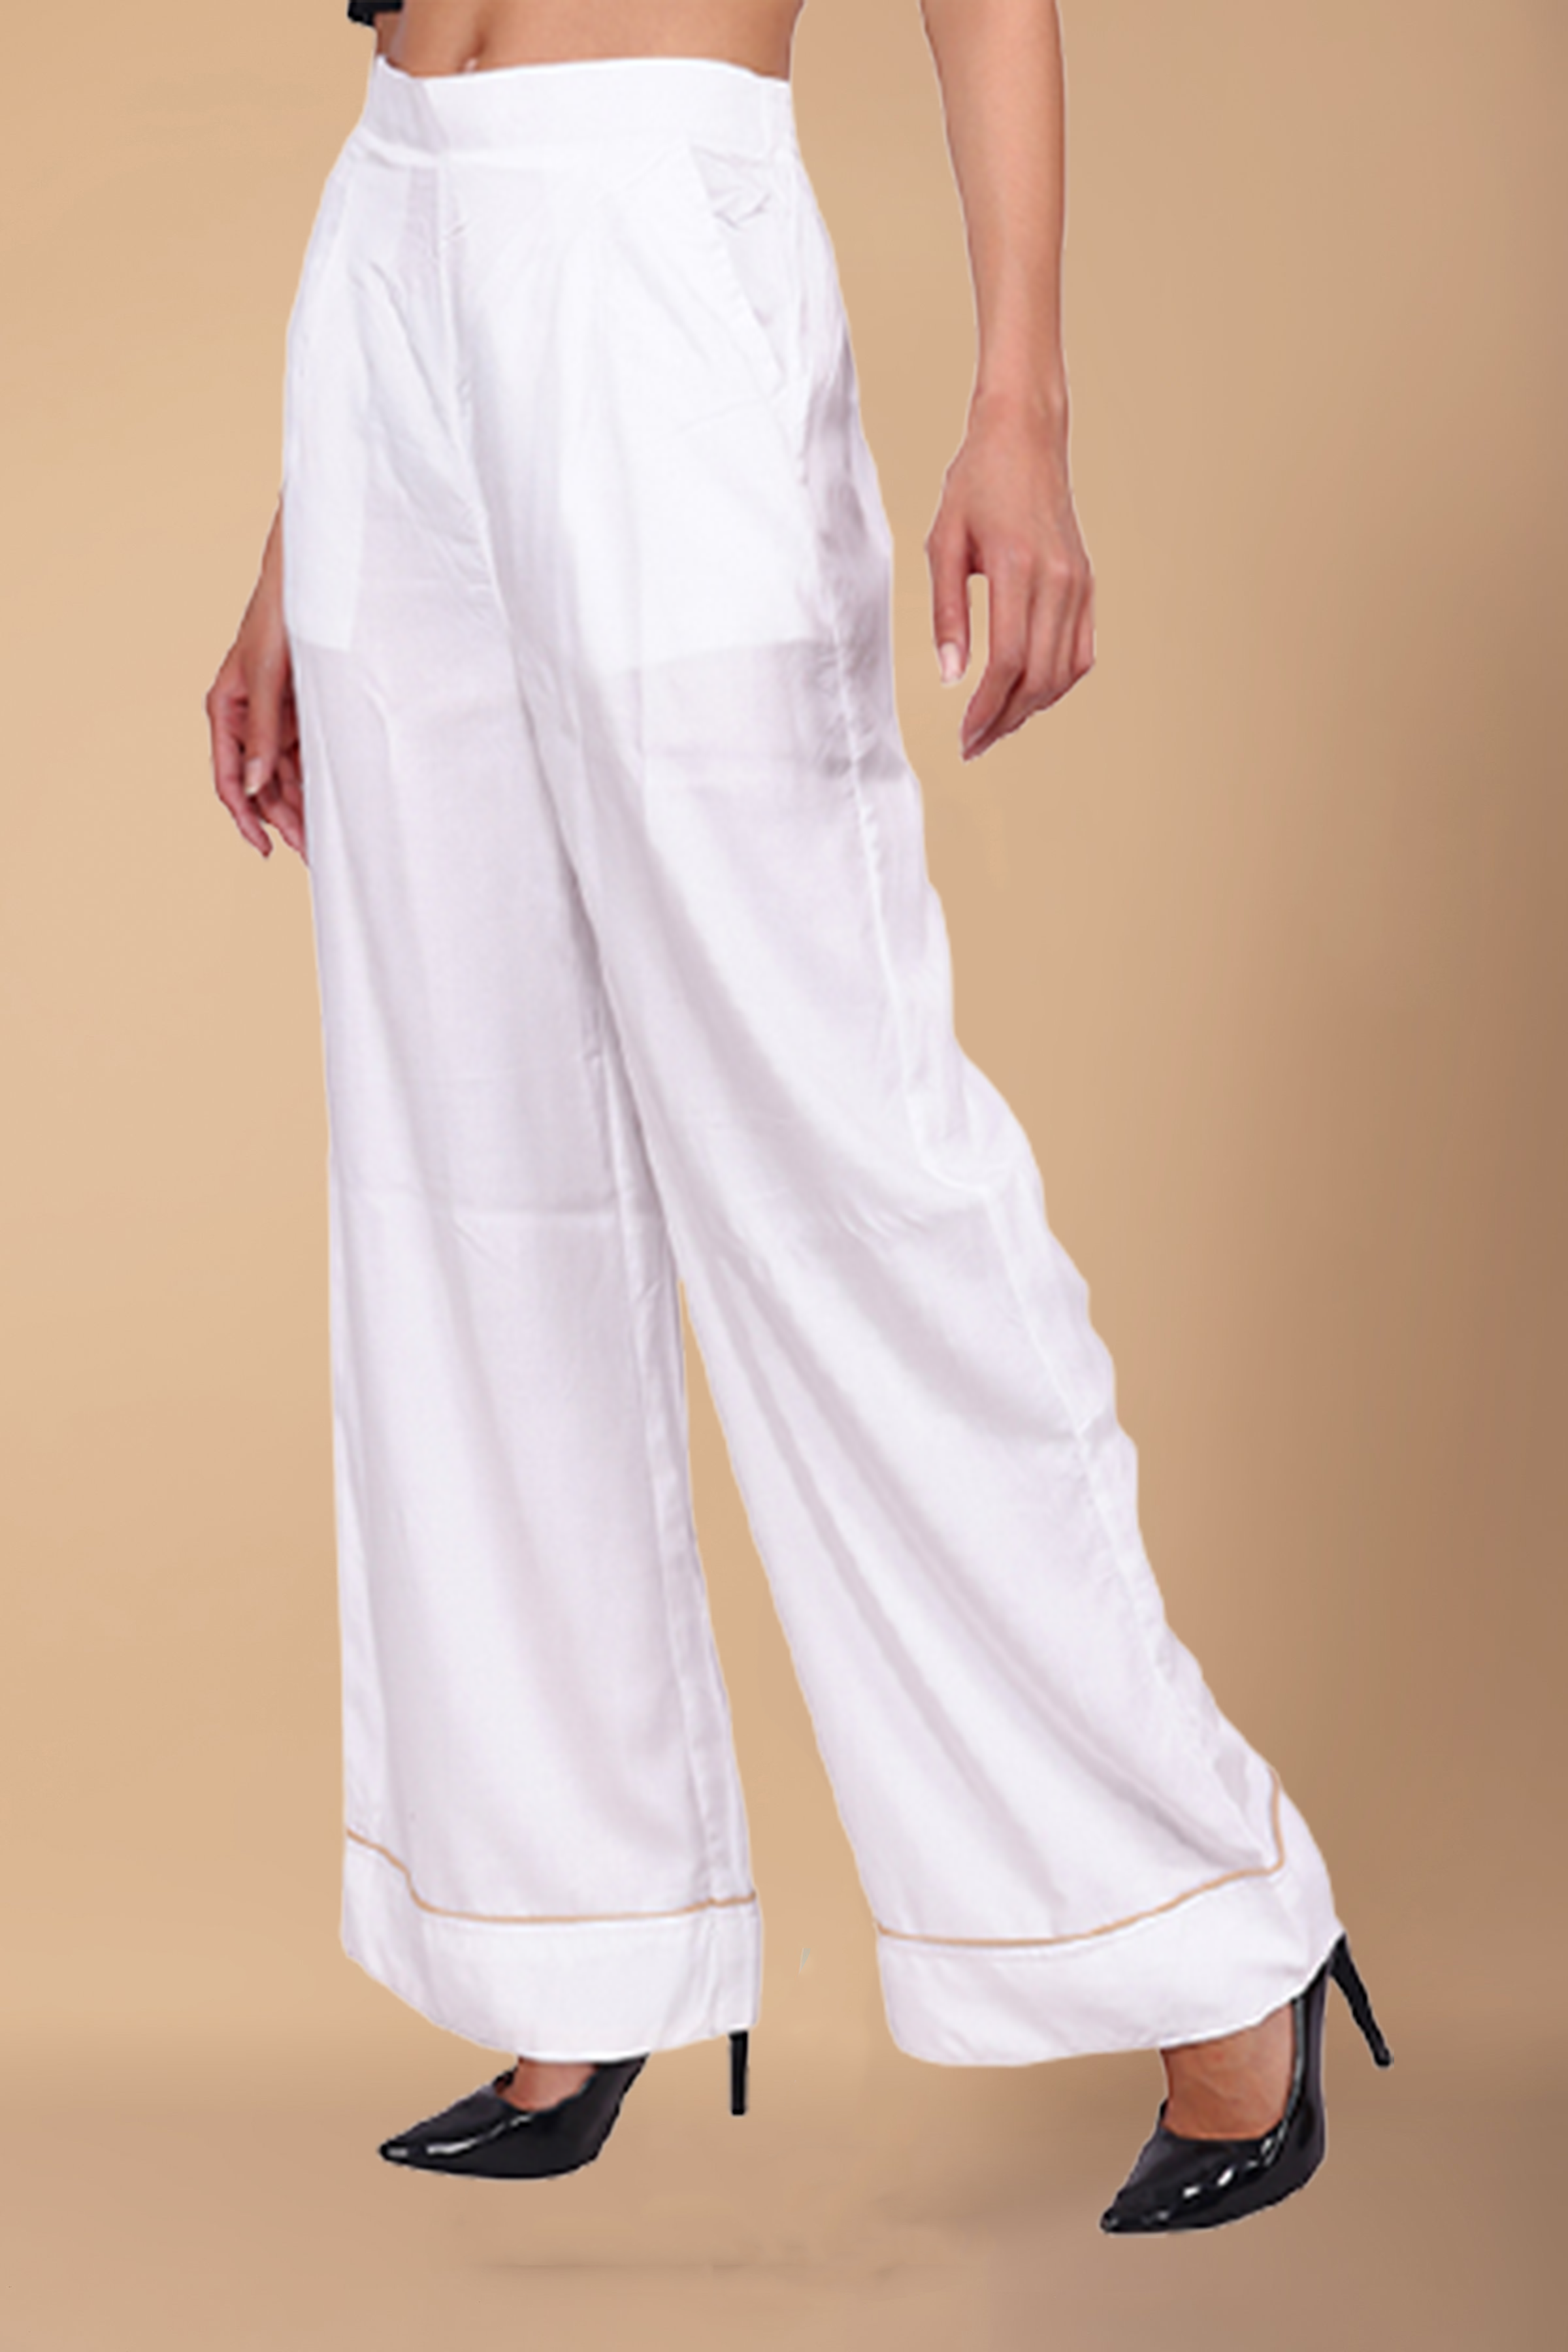 Plus Size Bottoms-Palazzo (Pants) for Women, with Pockets | 3XL,4XL,5XL,6XL,7XL  | eBay